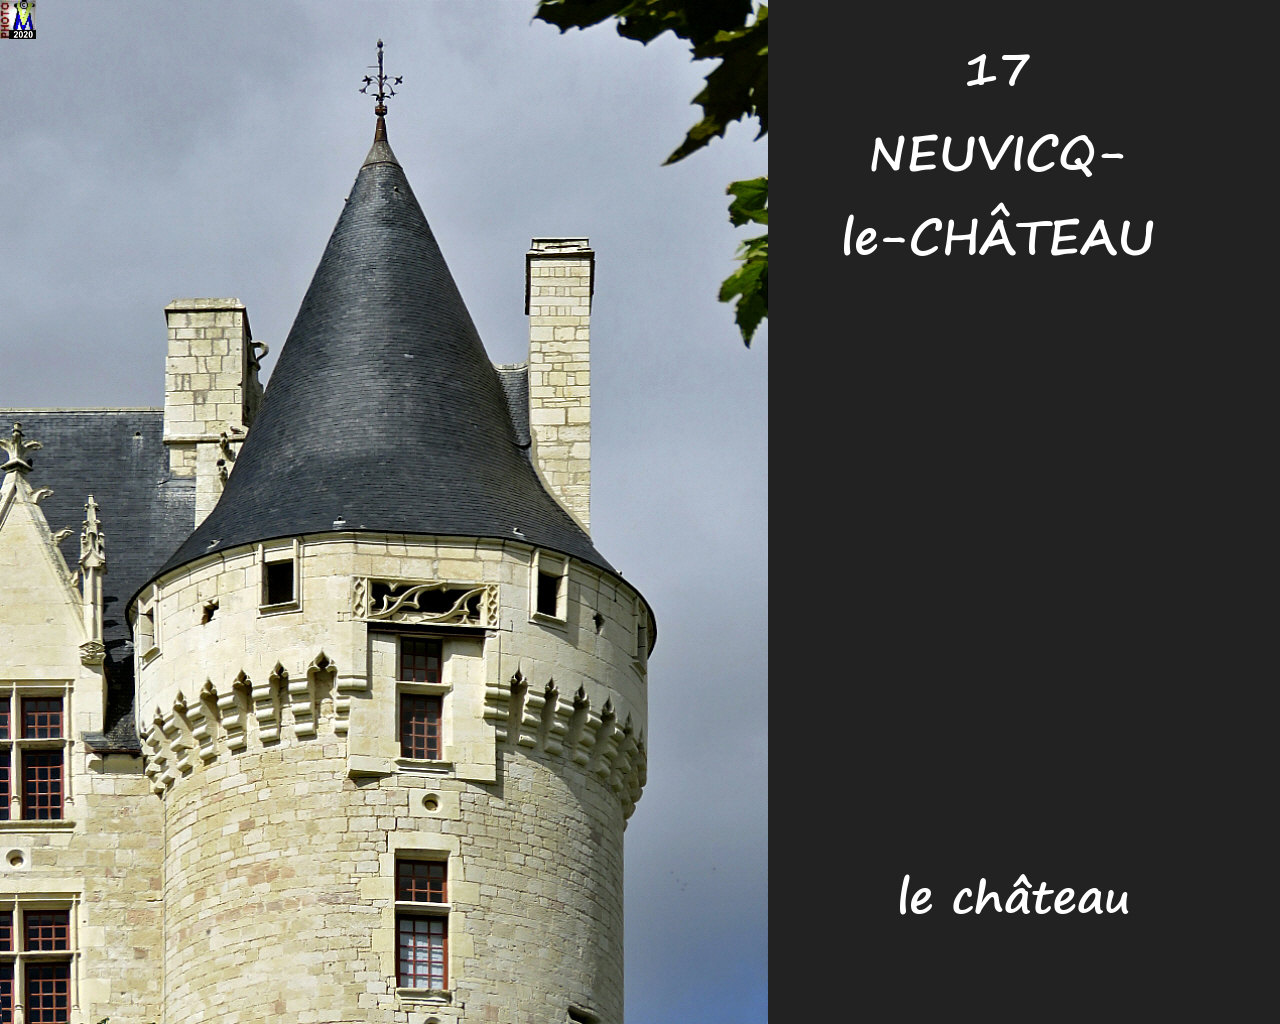 17NEUVICQ-CHATEAU_chateau_1024.jpg